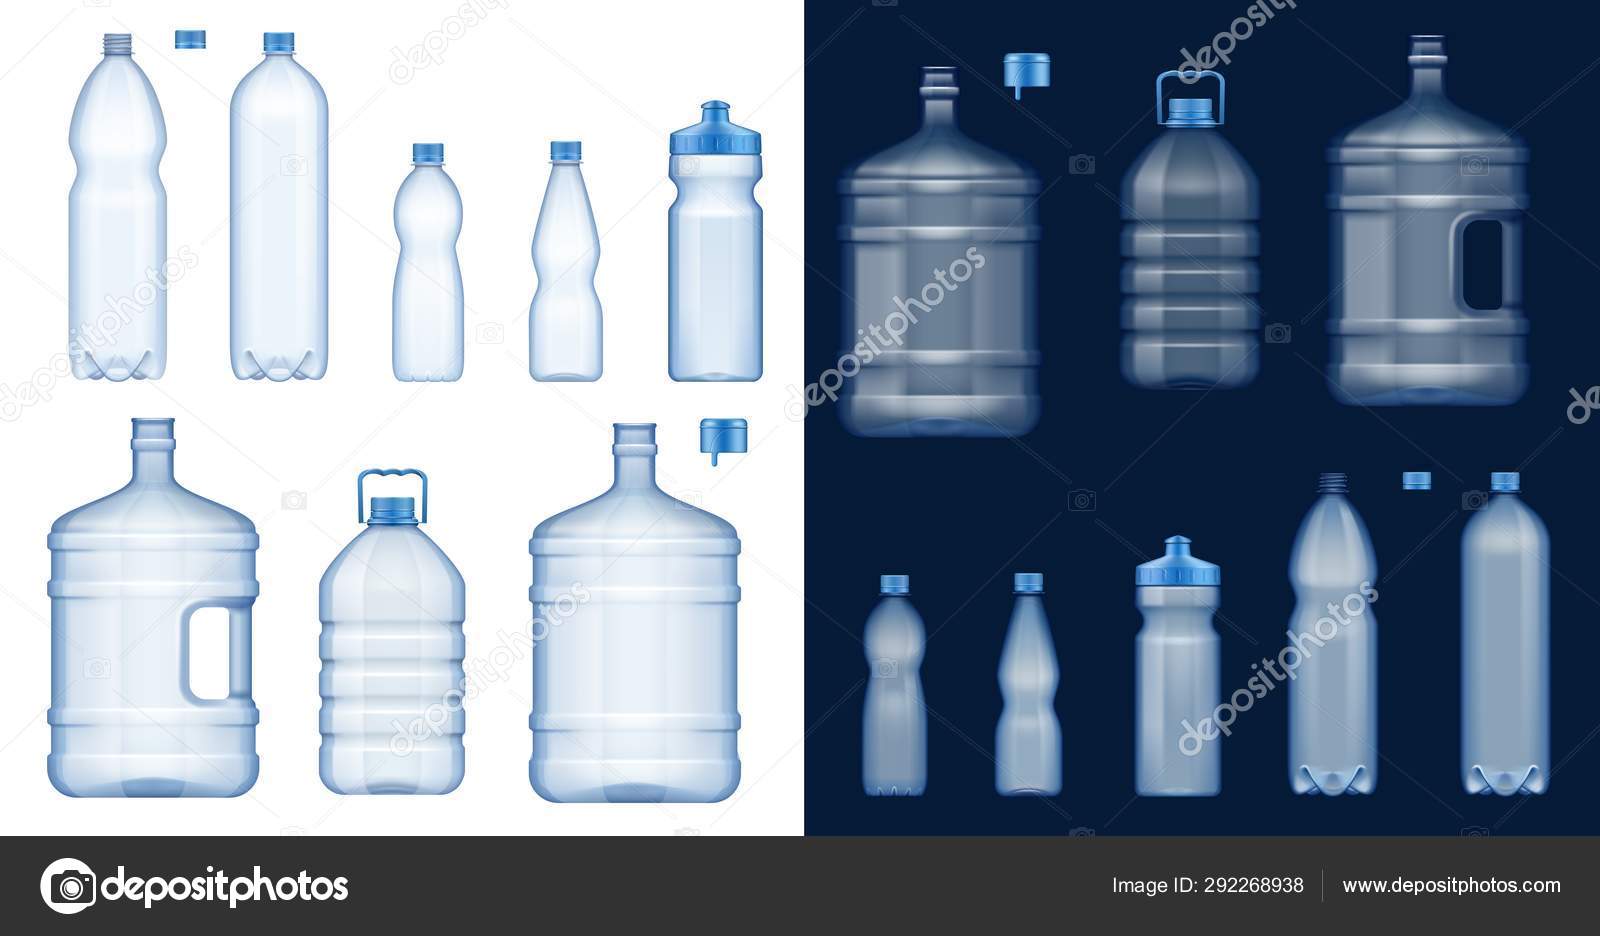 https://st4.depositphotos.com/1020070/29226/v/1600/depositphotos_292268938-stock-illustration-water-bottle-mockups-plastic-drink.jpg